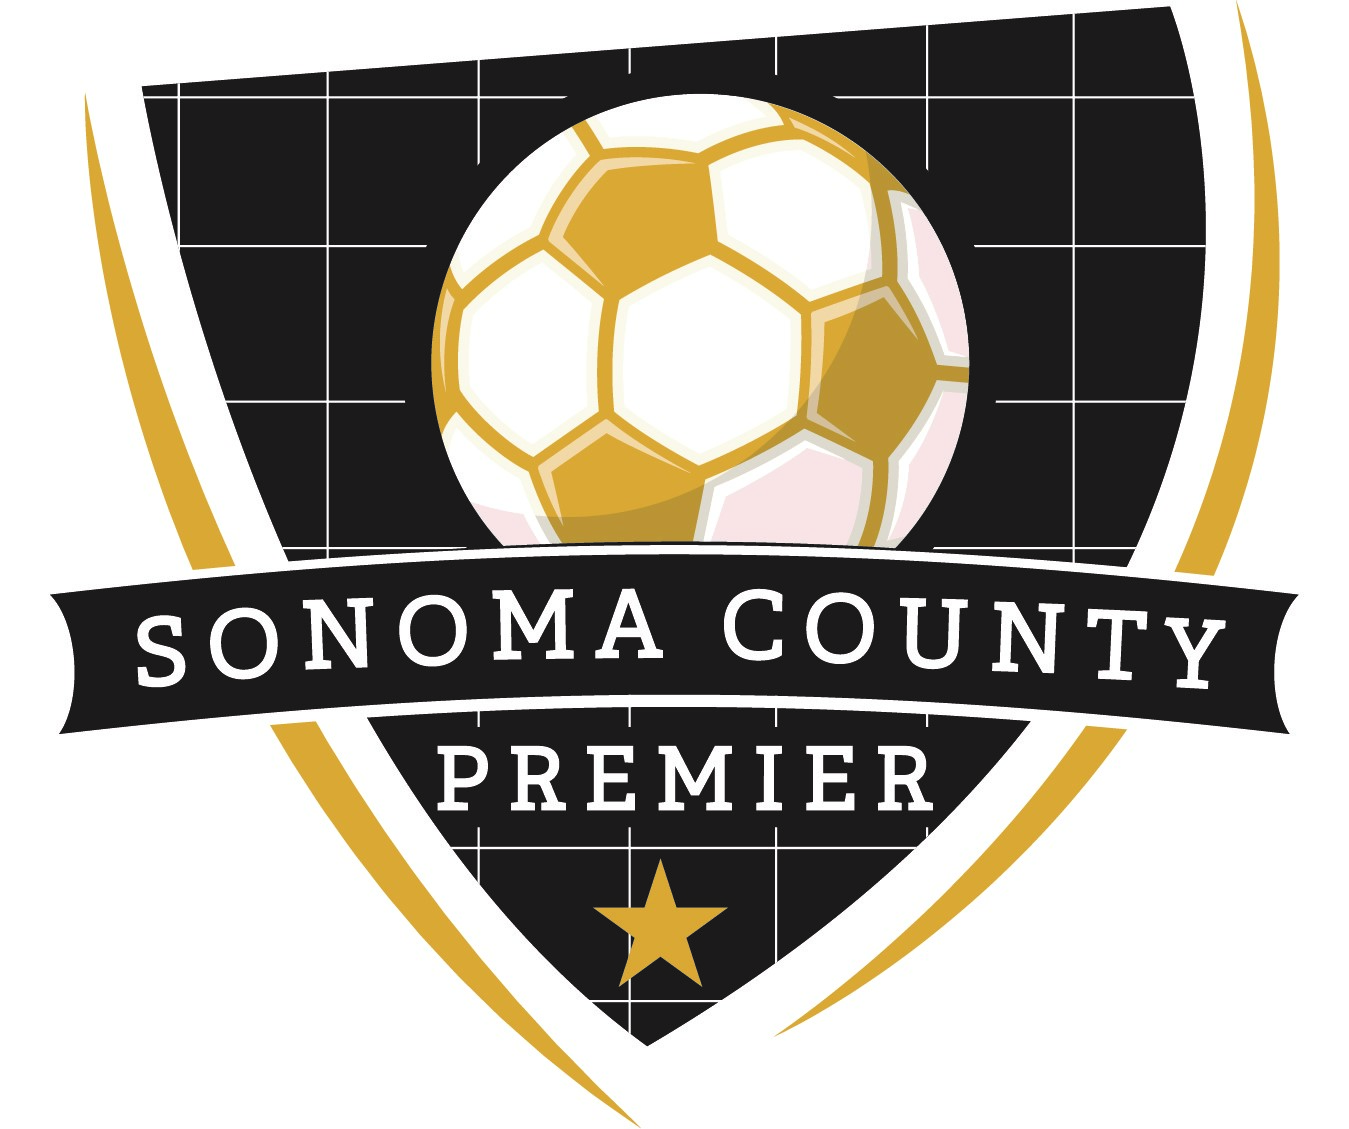 Sonoma County Premier Soccer team badge